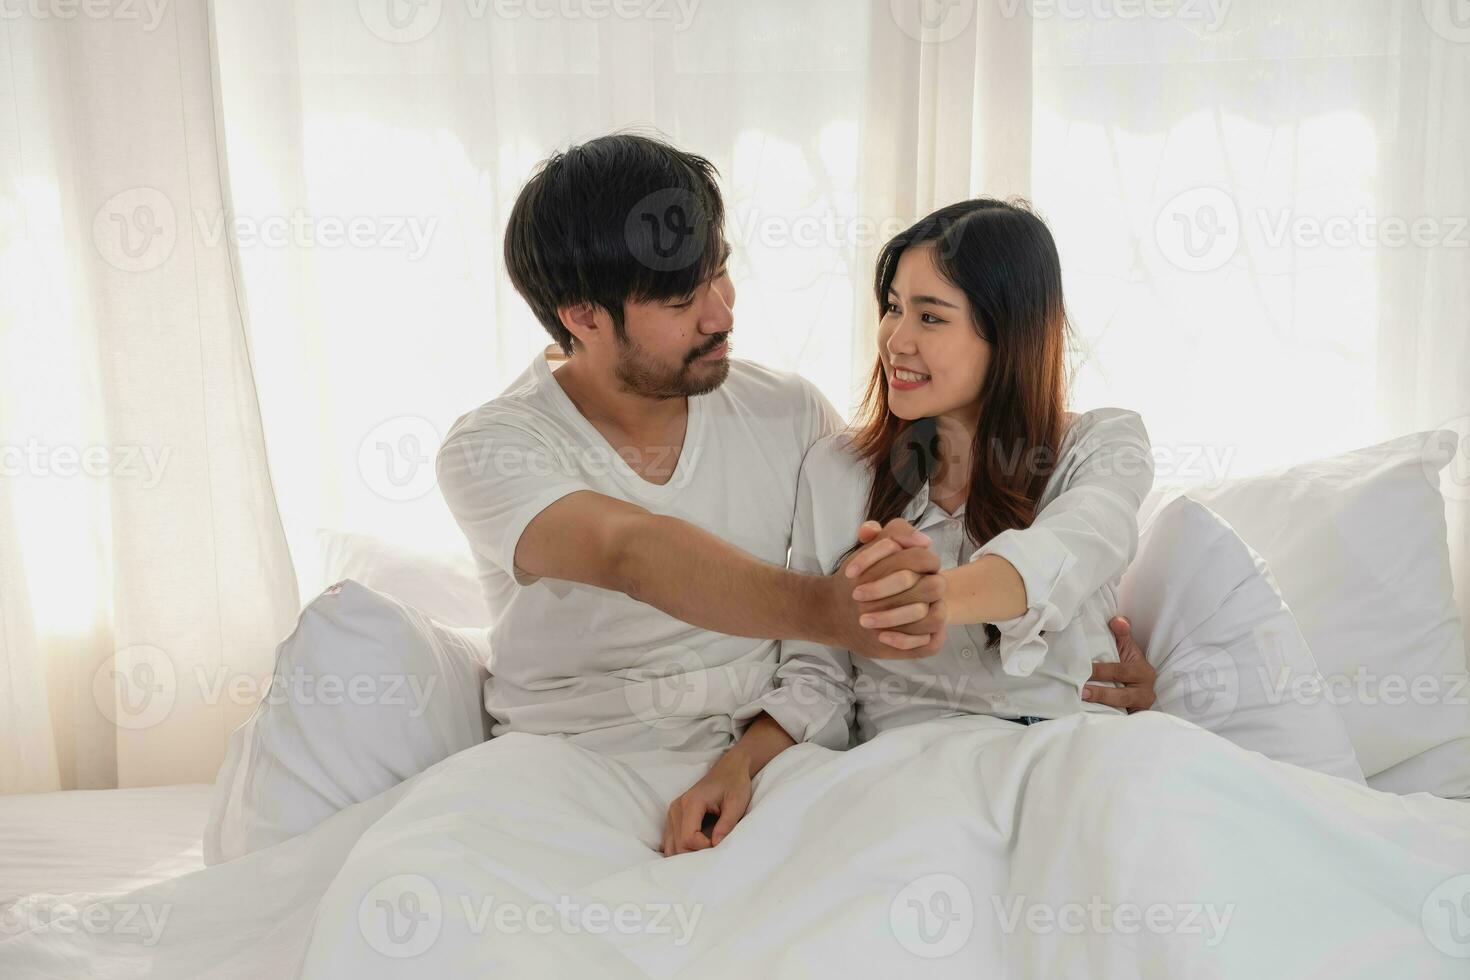 contento joven asiático Pareja abrazando, broma, jugando alegremente en cama a hogar, romántico hora a mejorar familia vinculación familia concepto. foto